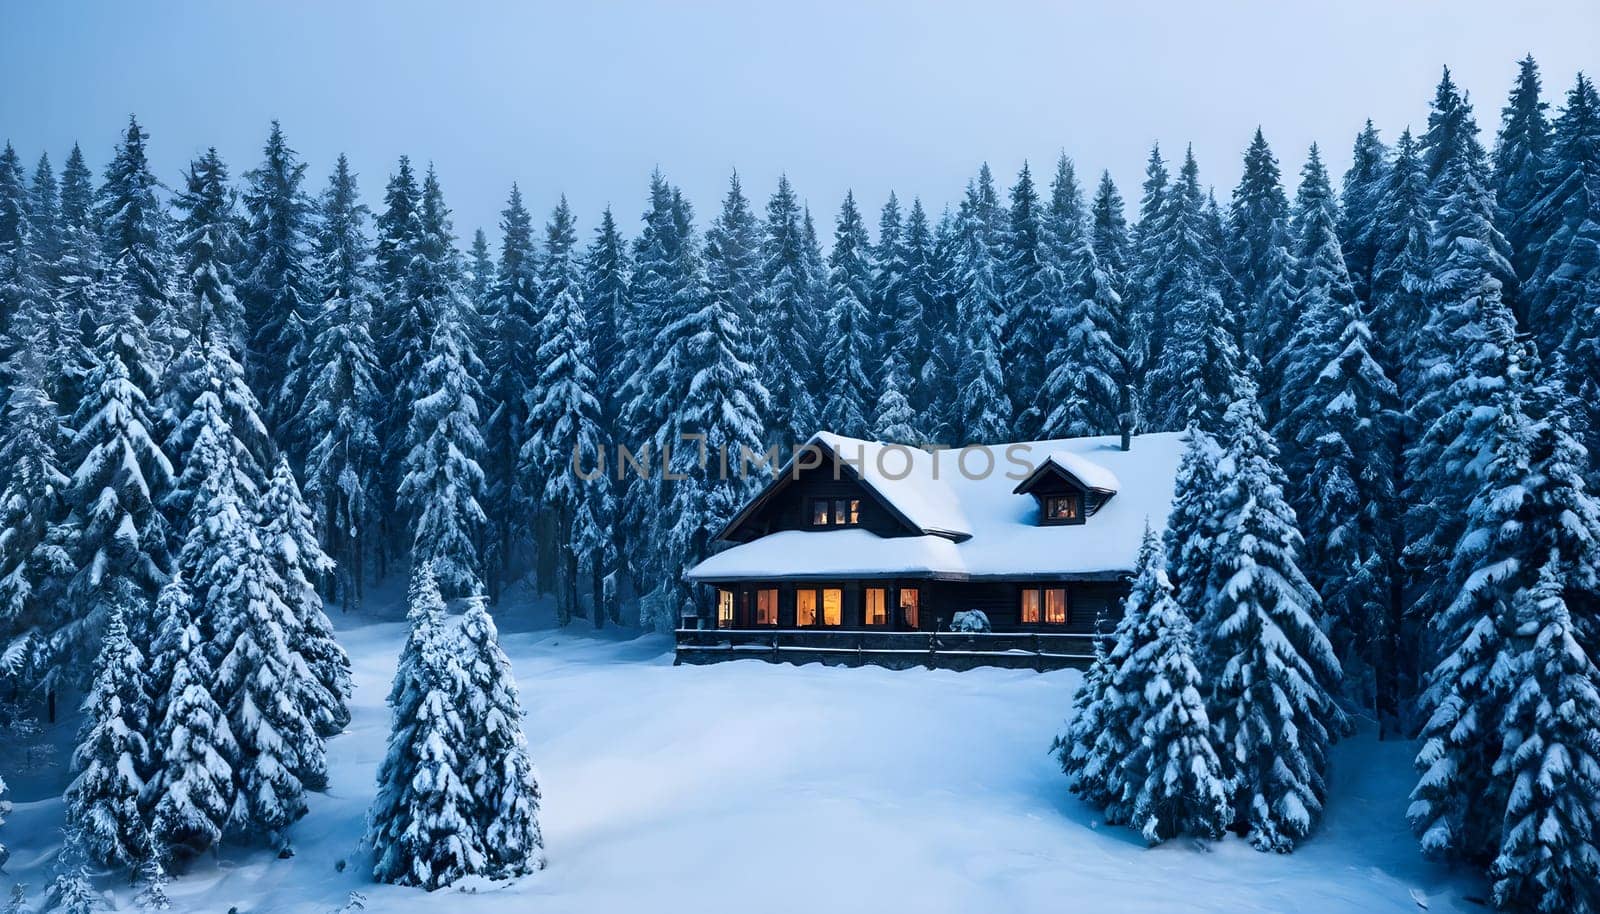 Winter Haven Cozy Retreats and Snowy Landscapes